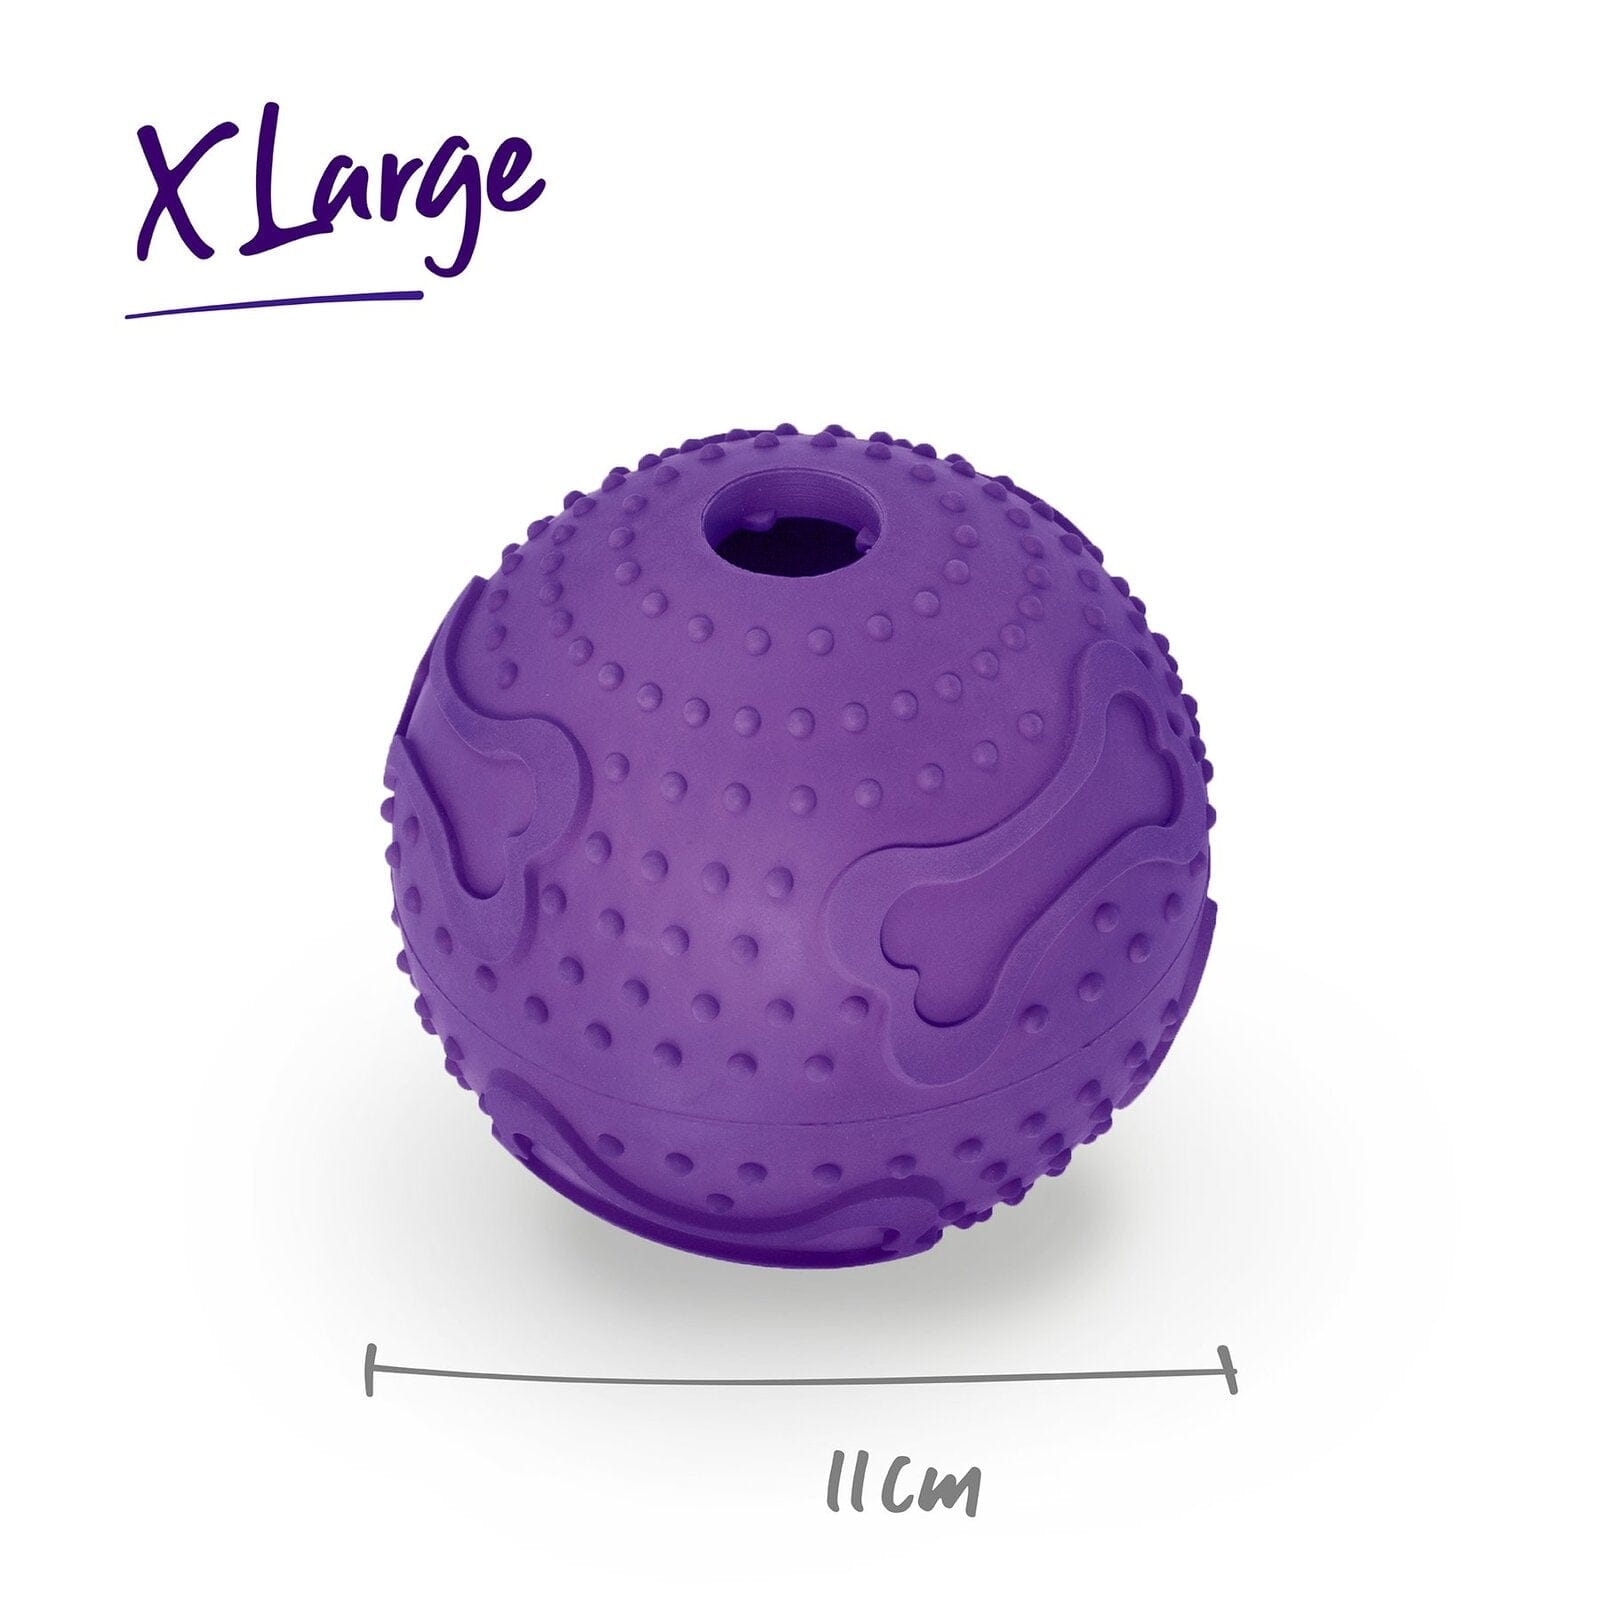 Kazoo Hide N' Treat Ball from Kazoo Pet Co